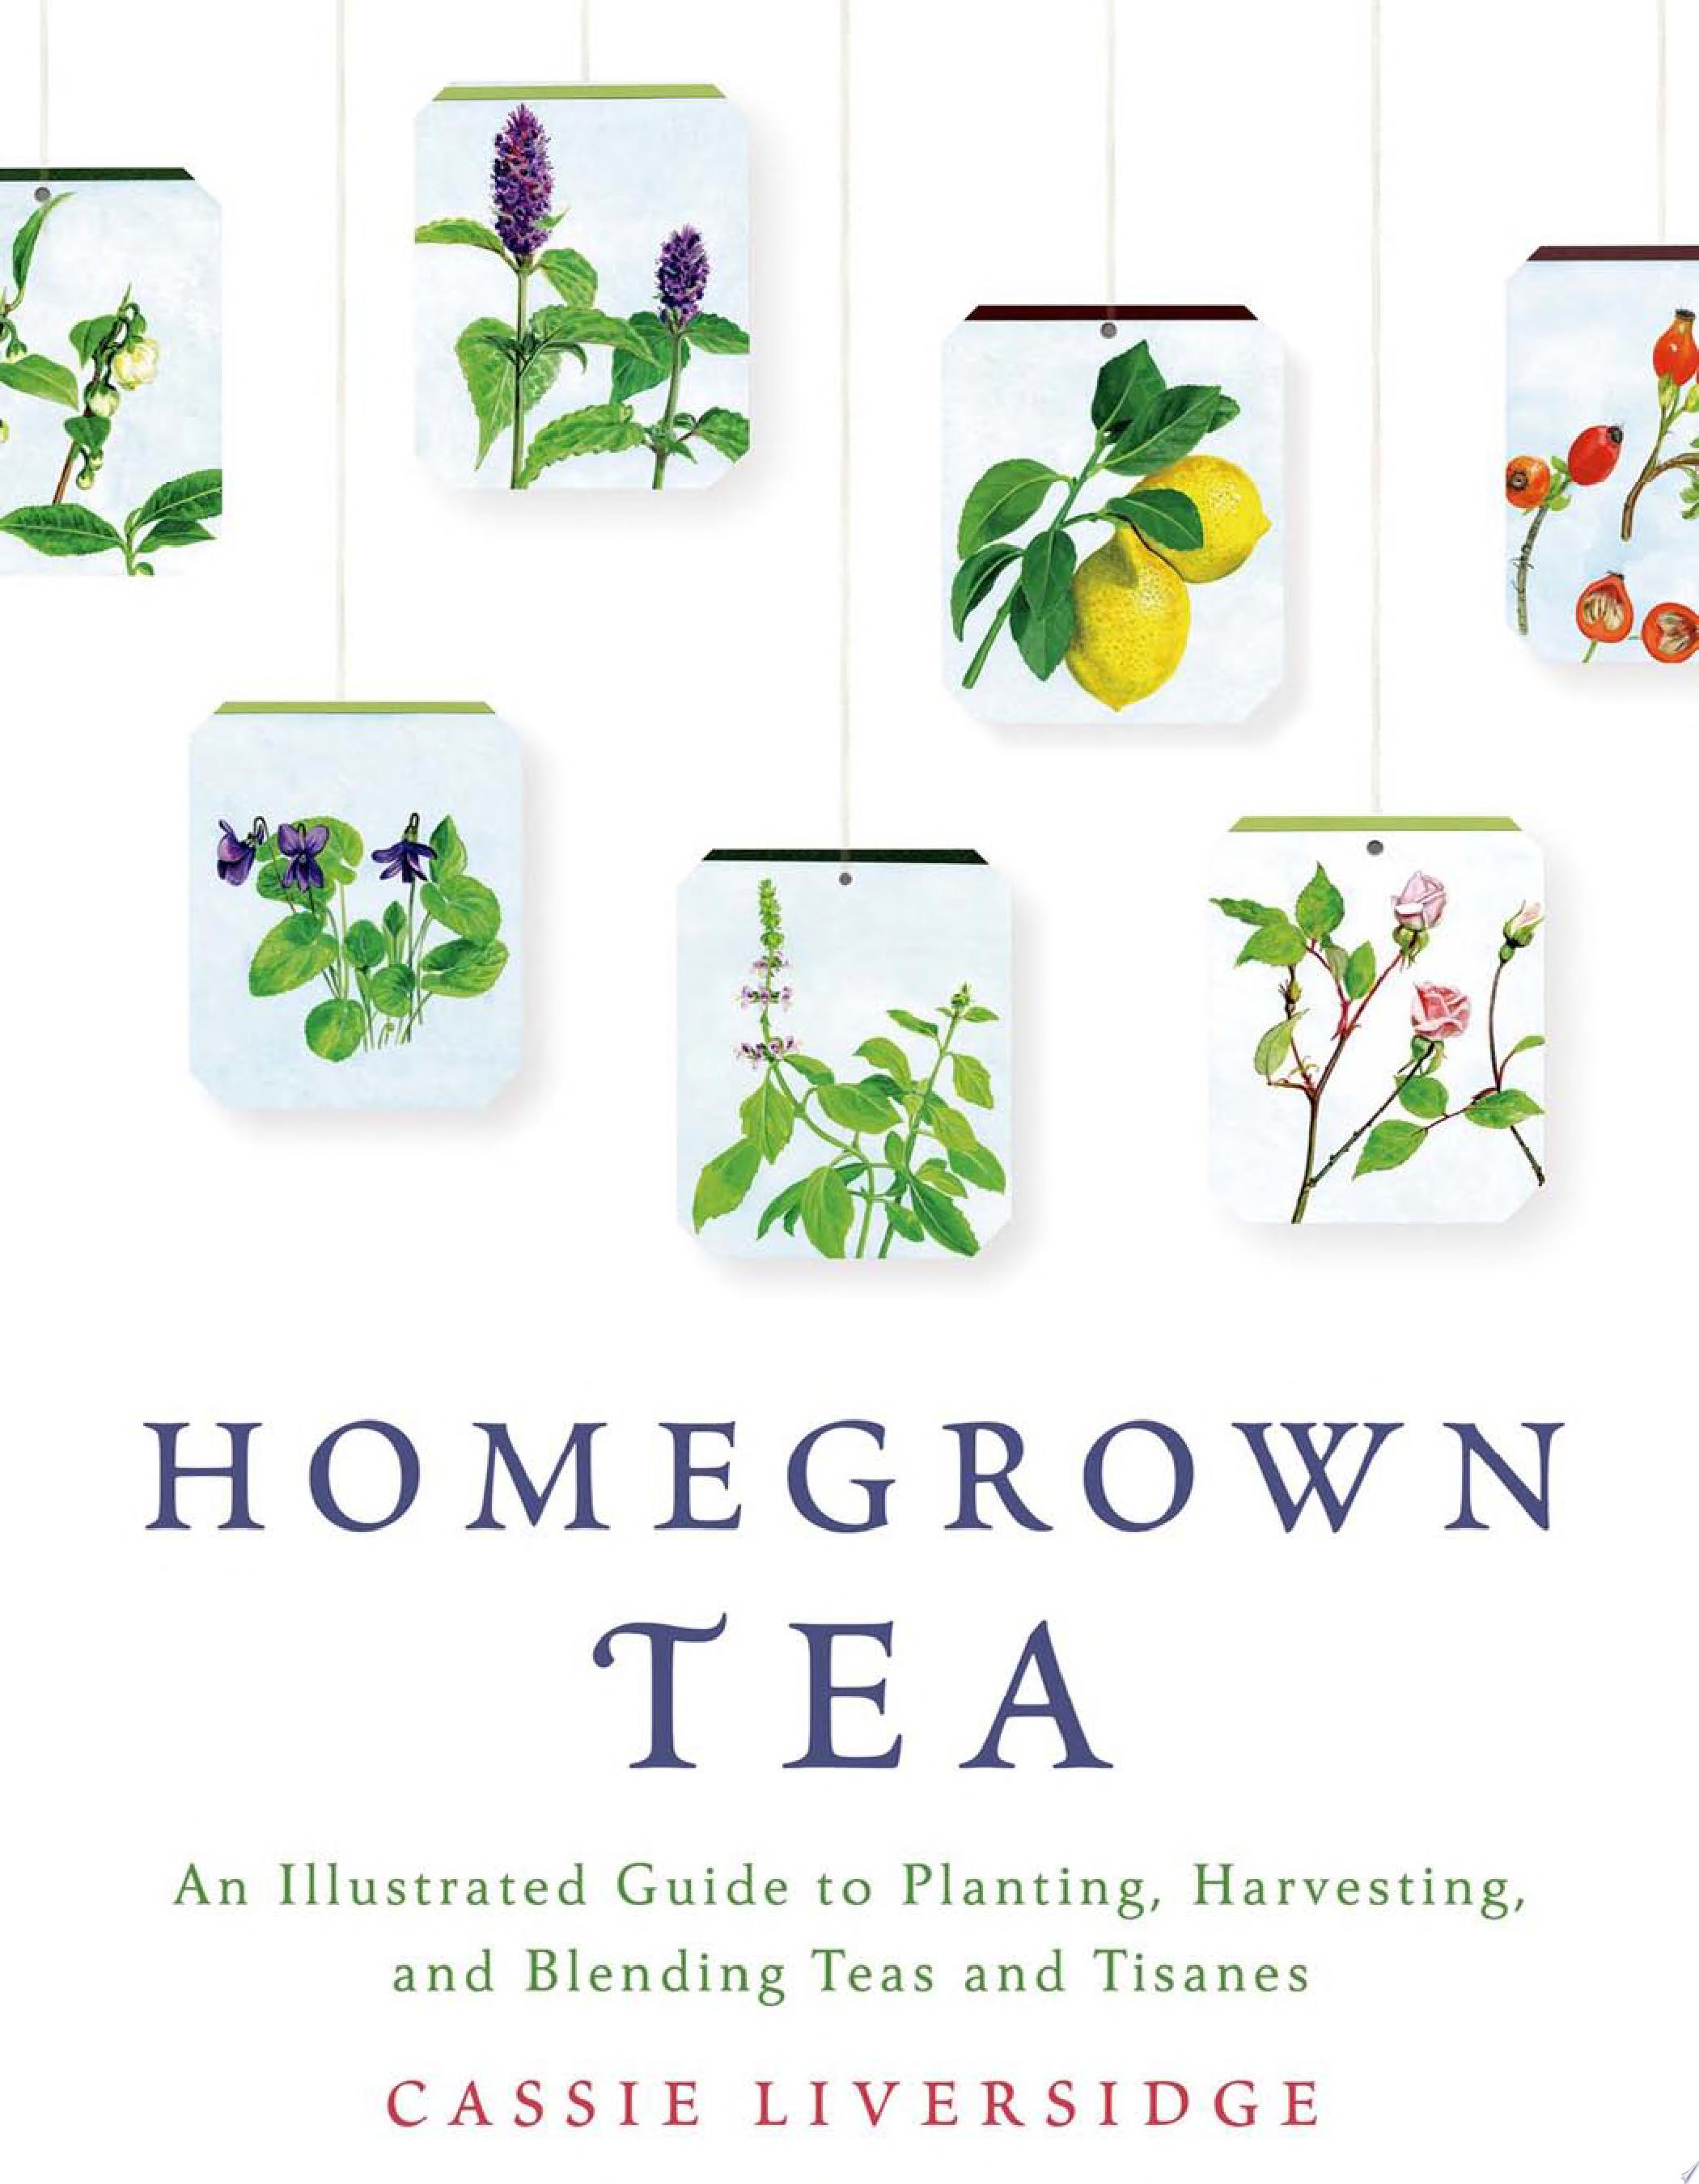 Image for "Homegrown Tea"